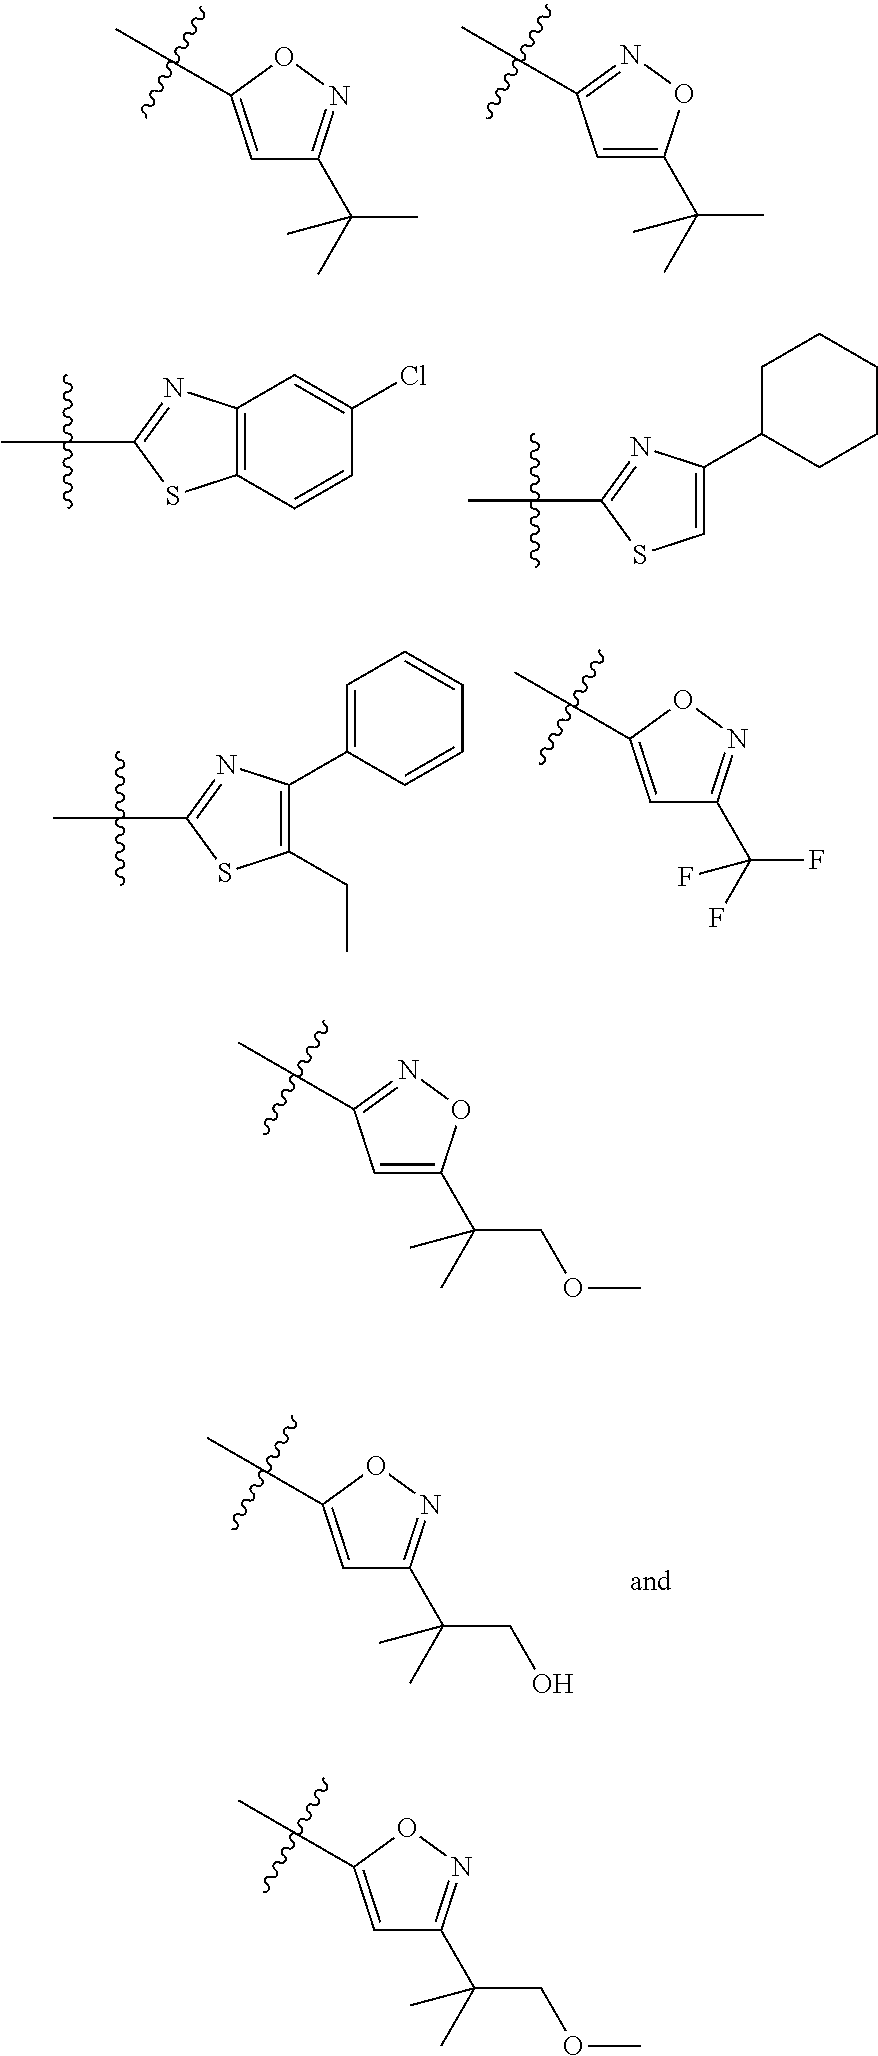 Azetidine 2-Carboxamide Derivatives Which Modulate The CB2 Receptor